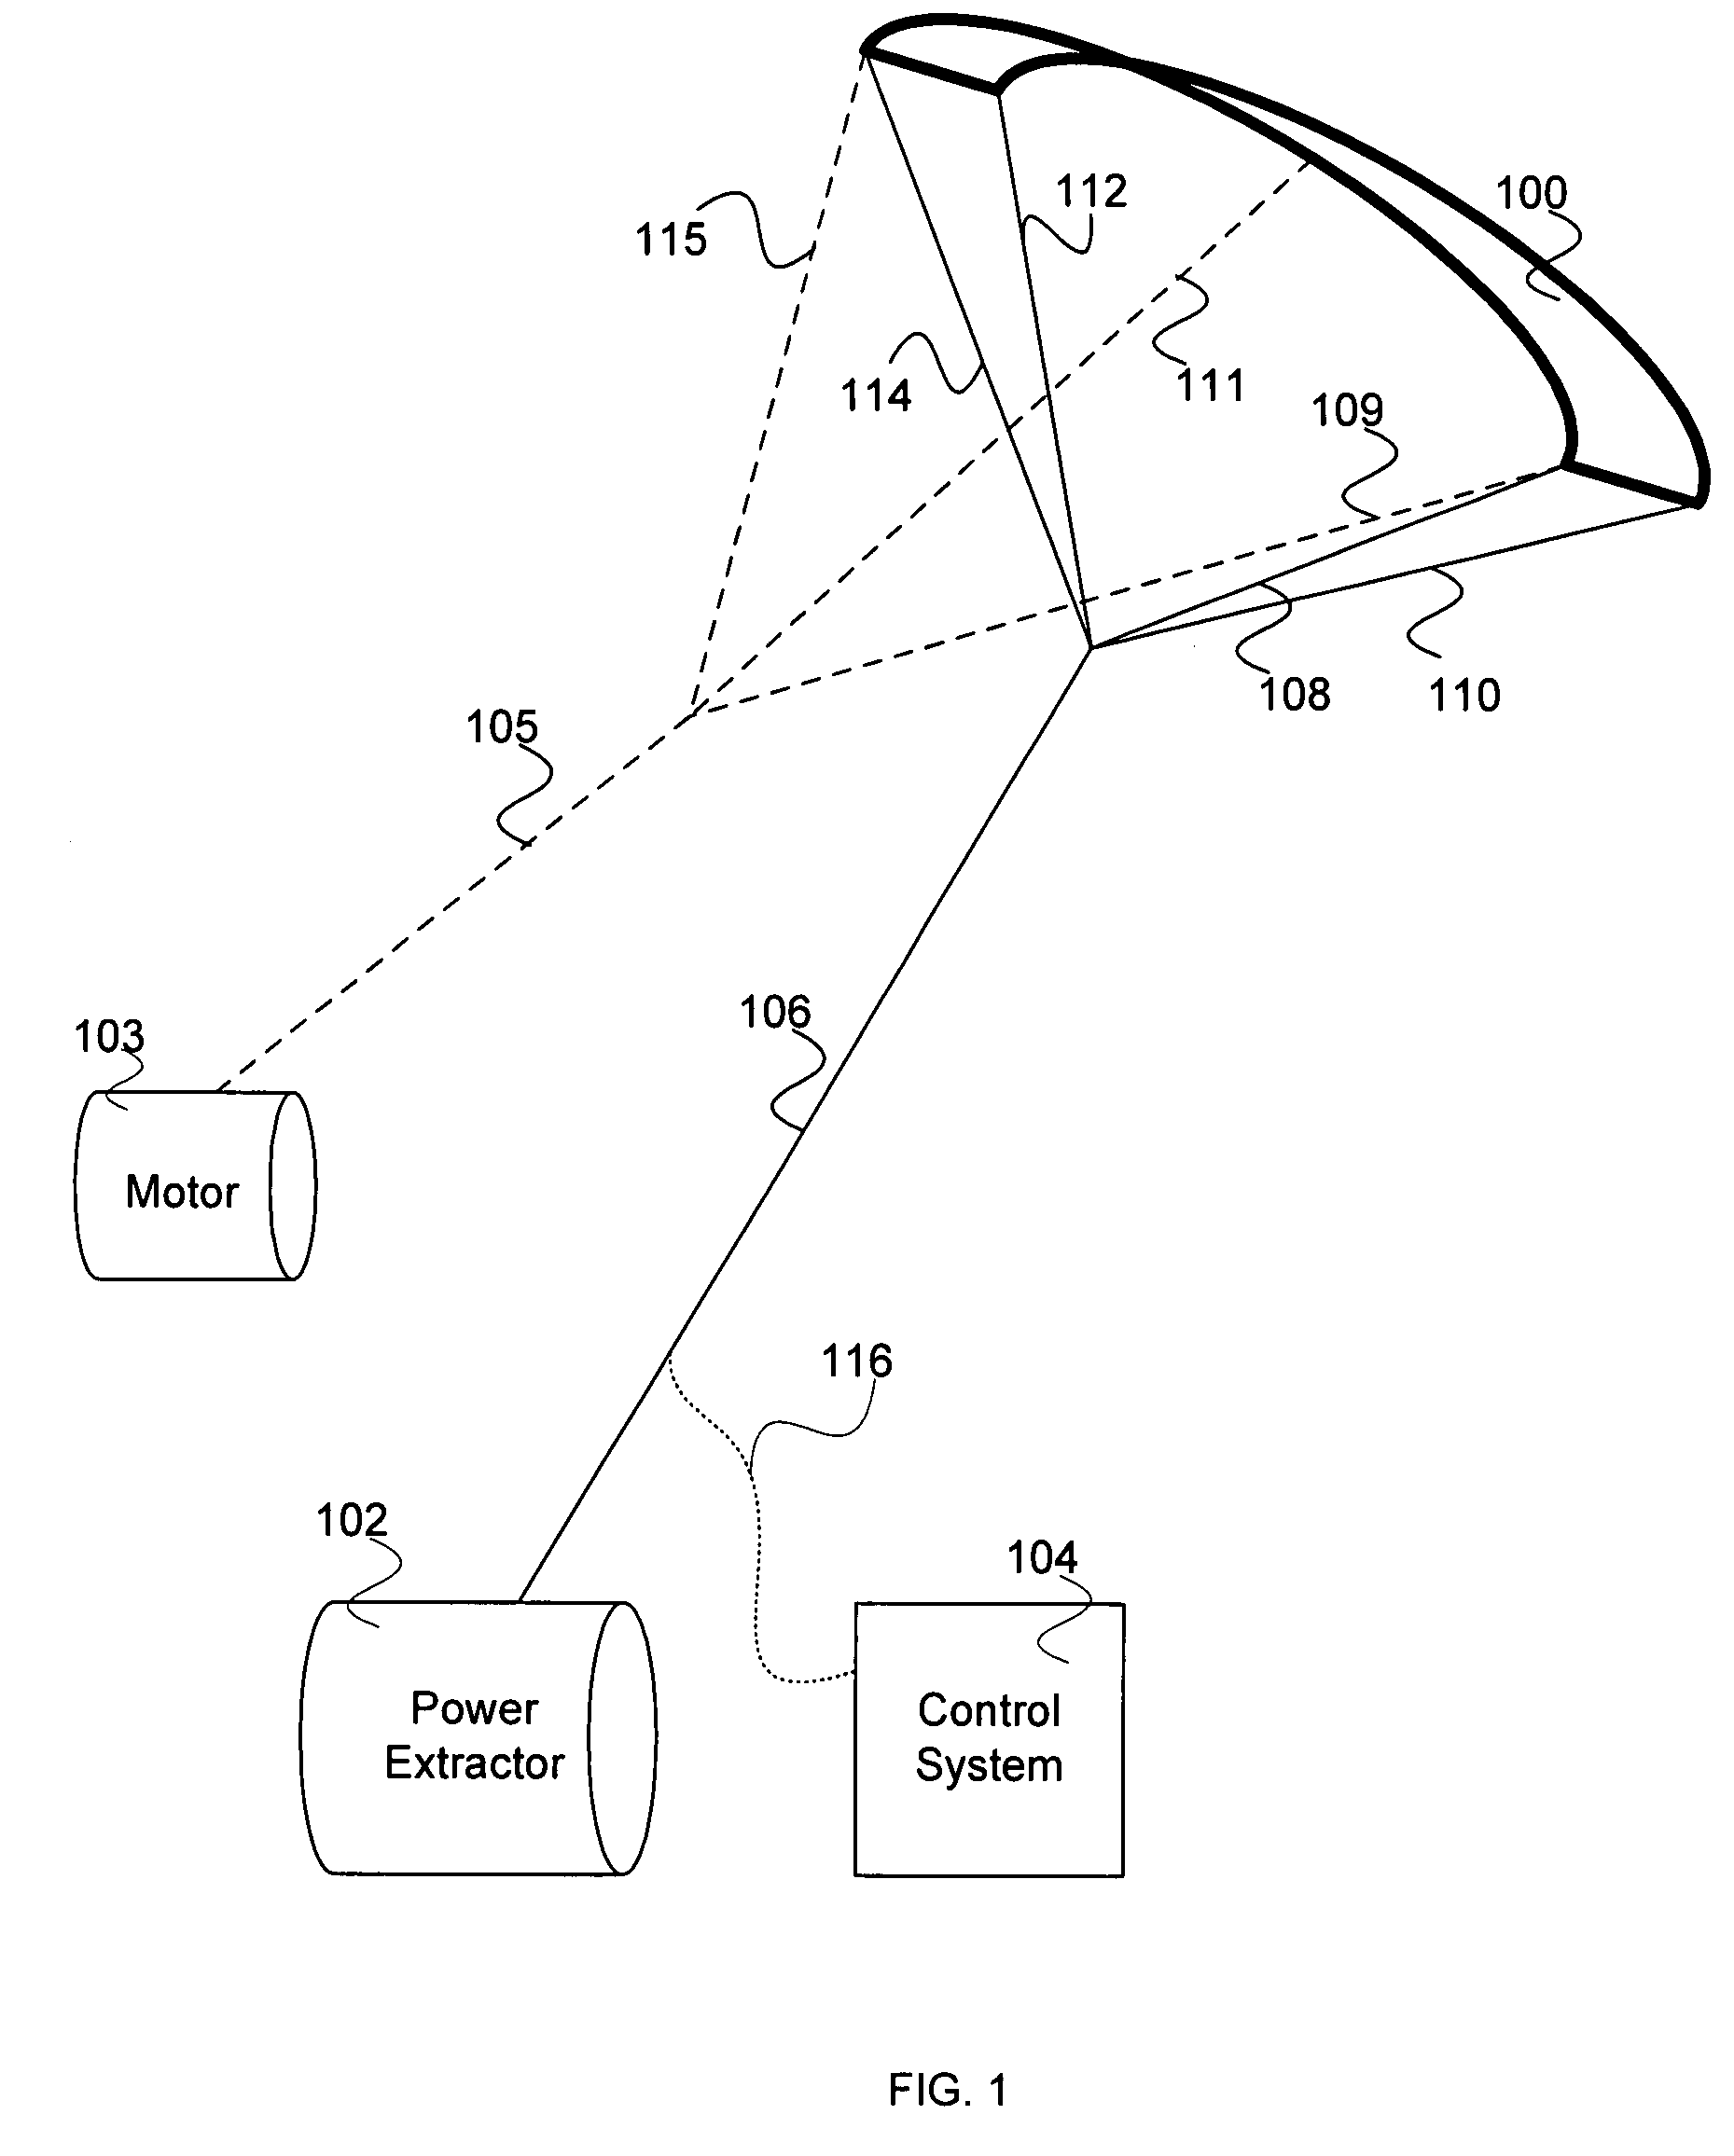 Bimodal kite system